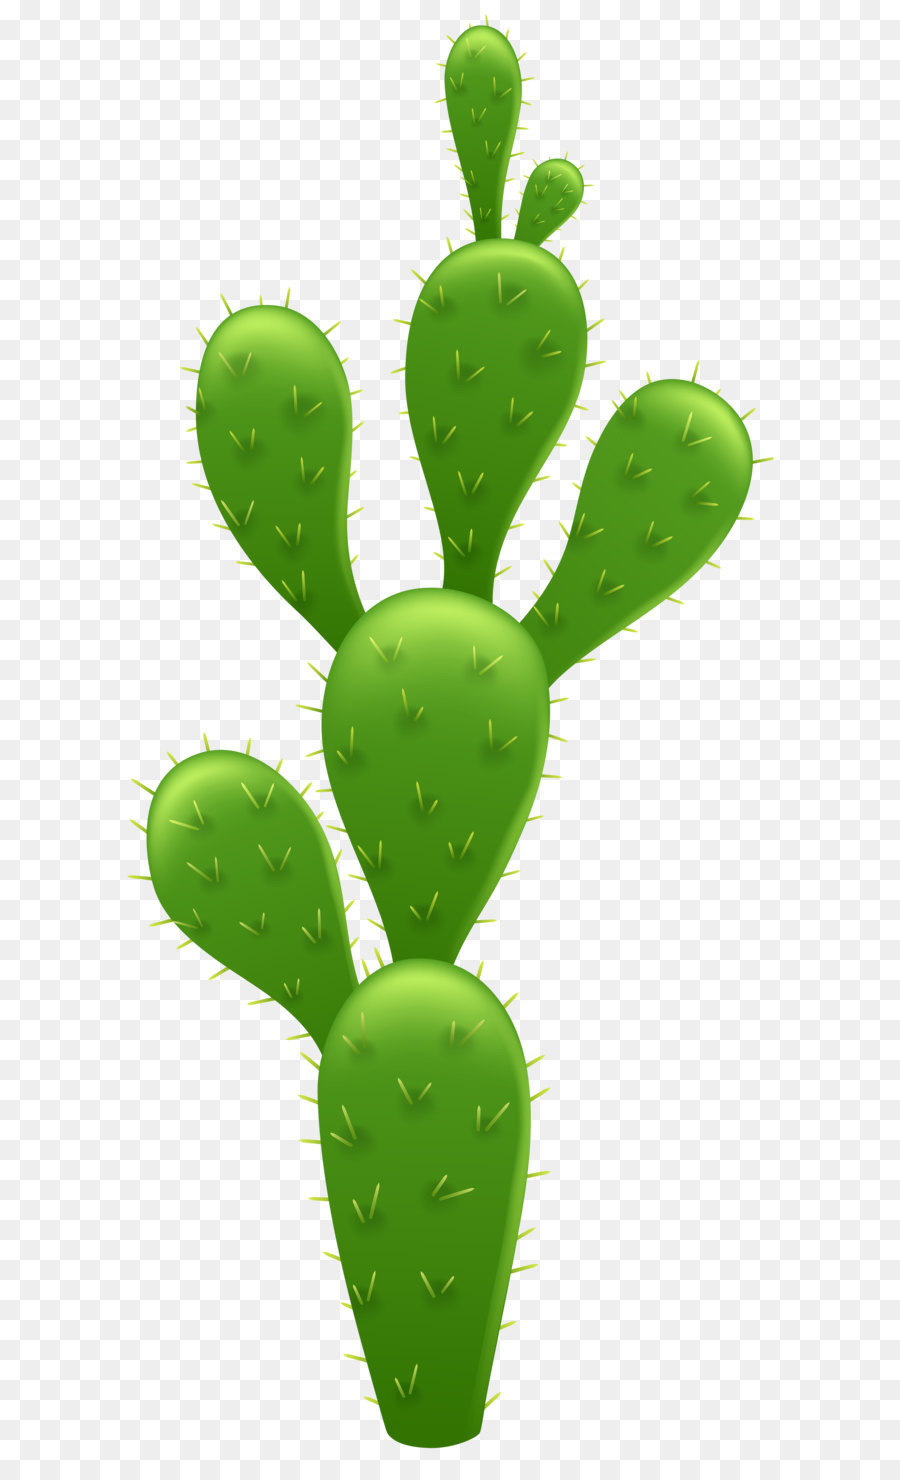 Cactaceae Saguaro Clip art - Cactus Transparent PNG Clip Art Image png download - 3558*8000 - Free Transparent Cactaceae png Download.